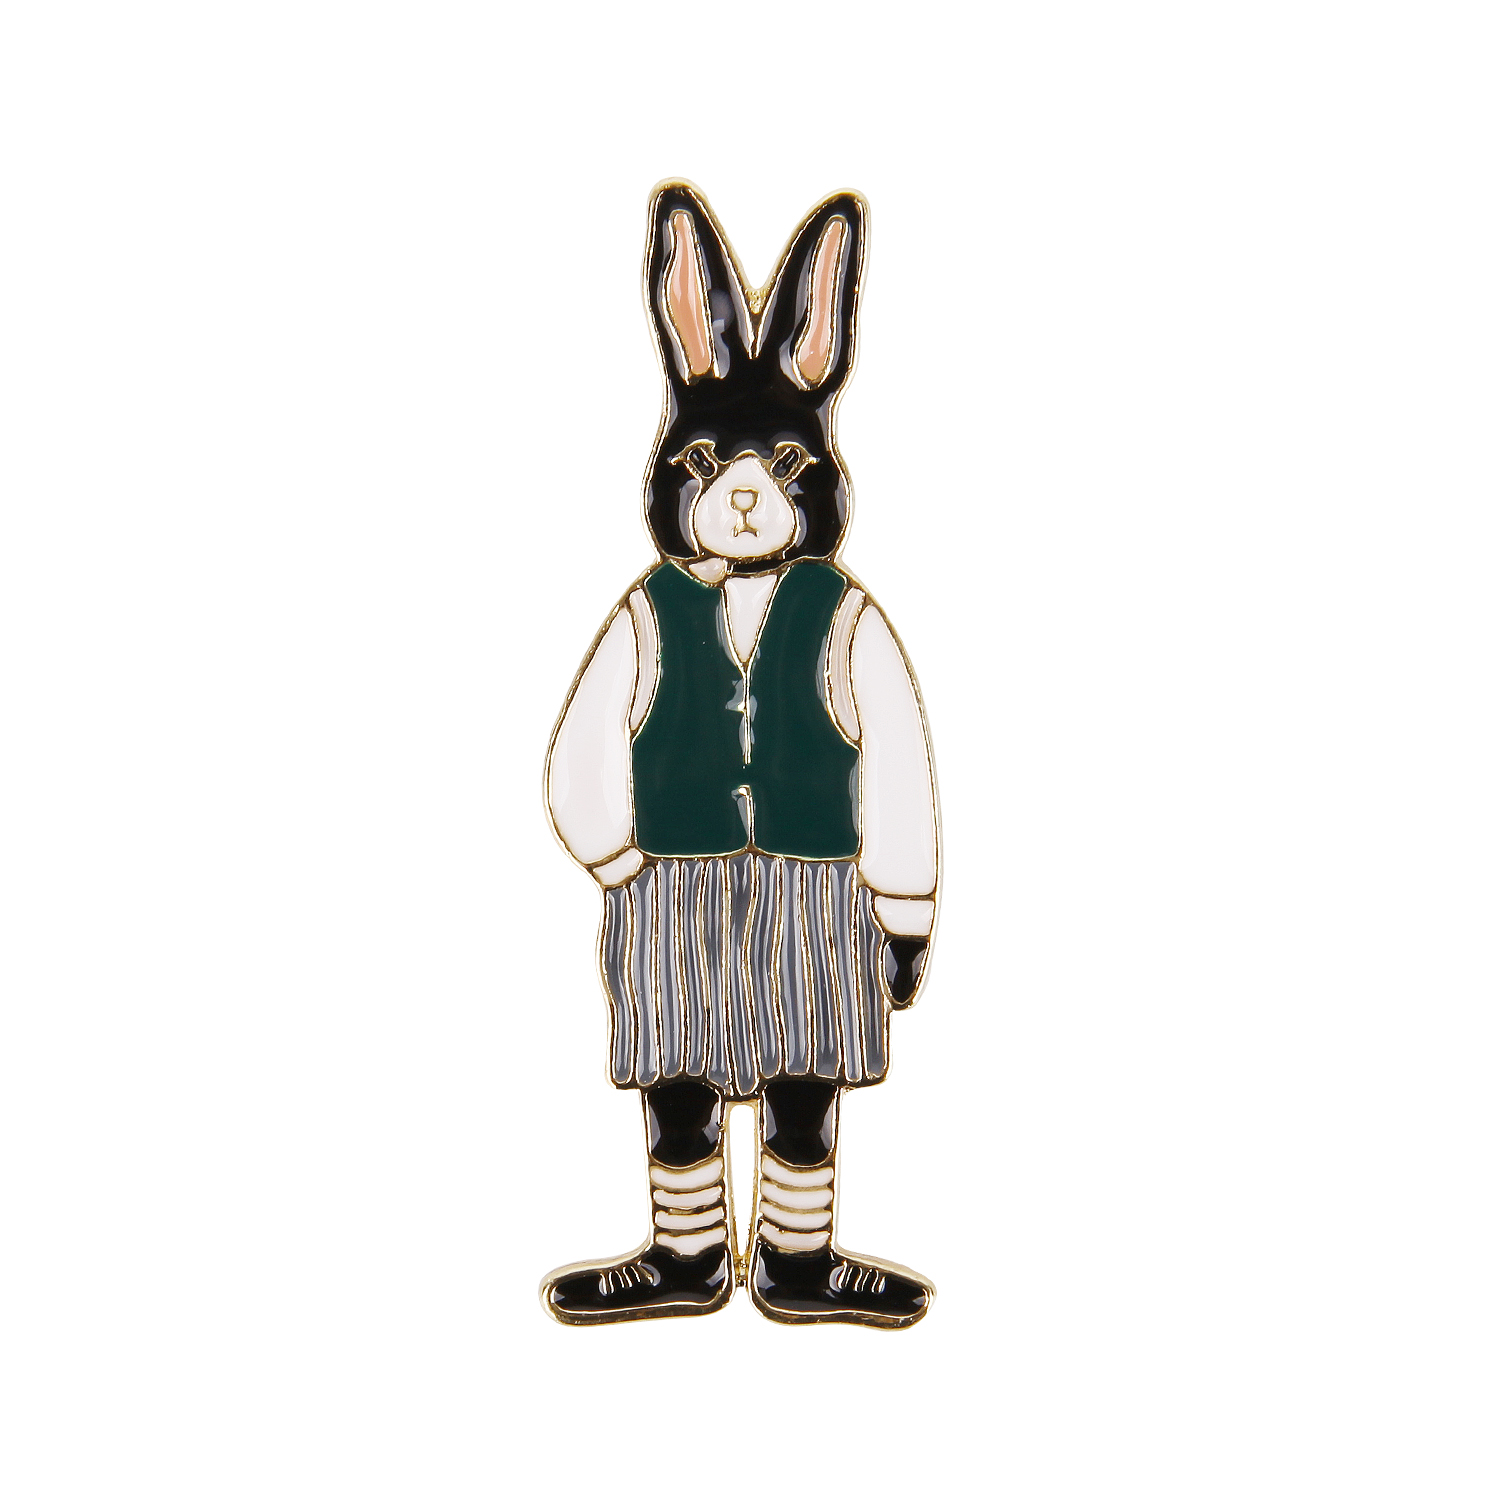 Cartoon Rabbit Kitten Fox Cat Animal Jacket Brooch/Couple Collar Enamel Badge Pin/Button Lapel Jewelry Hat Backpack Accessories